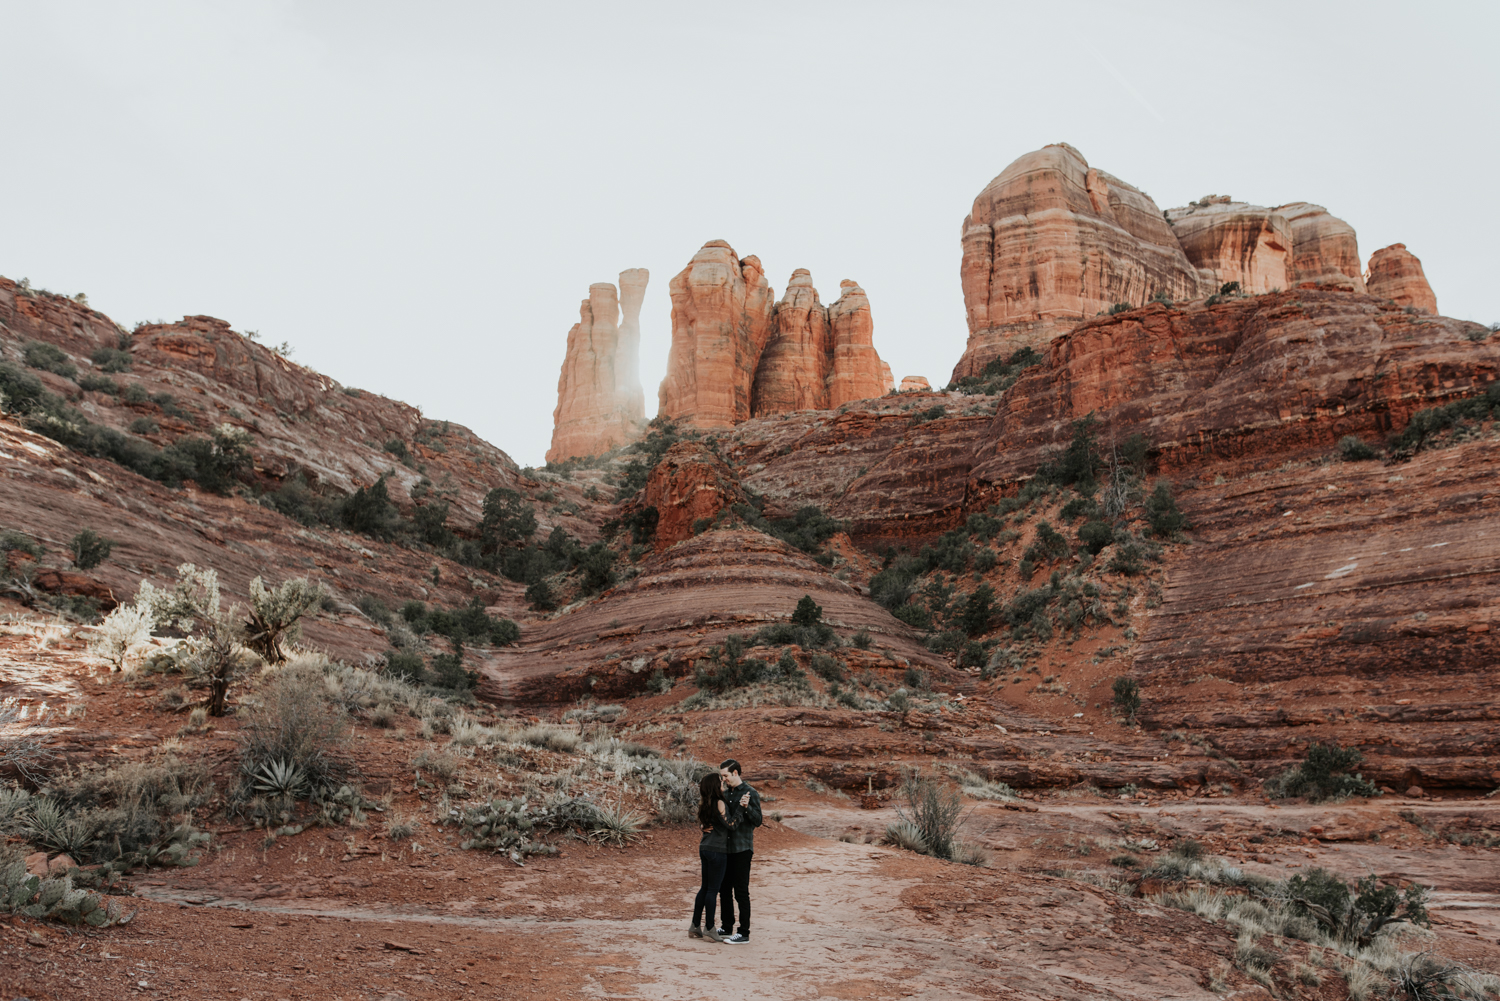 Couples Engagement Photographer, Adventure Engagement Session in Sedona, Arizona